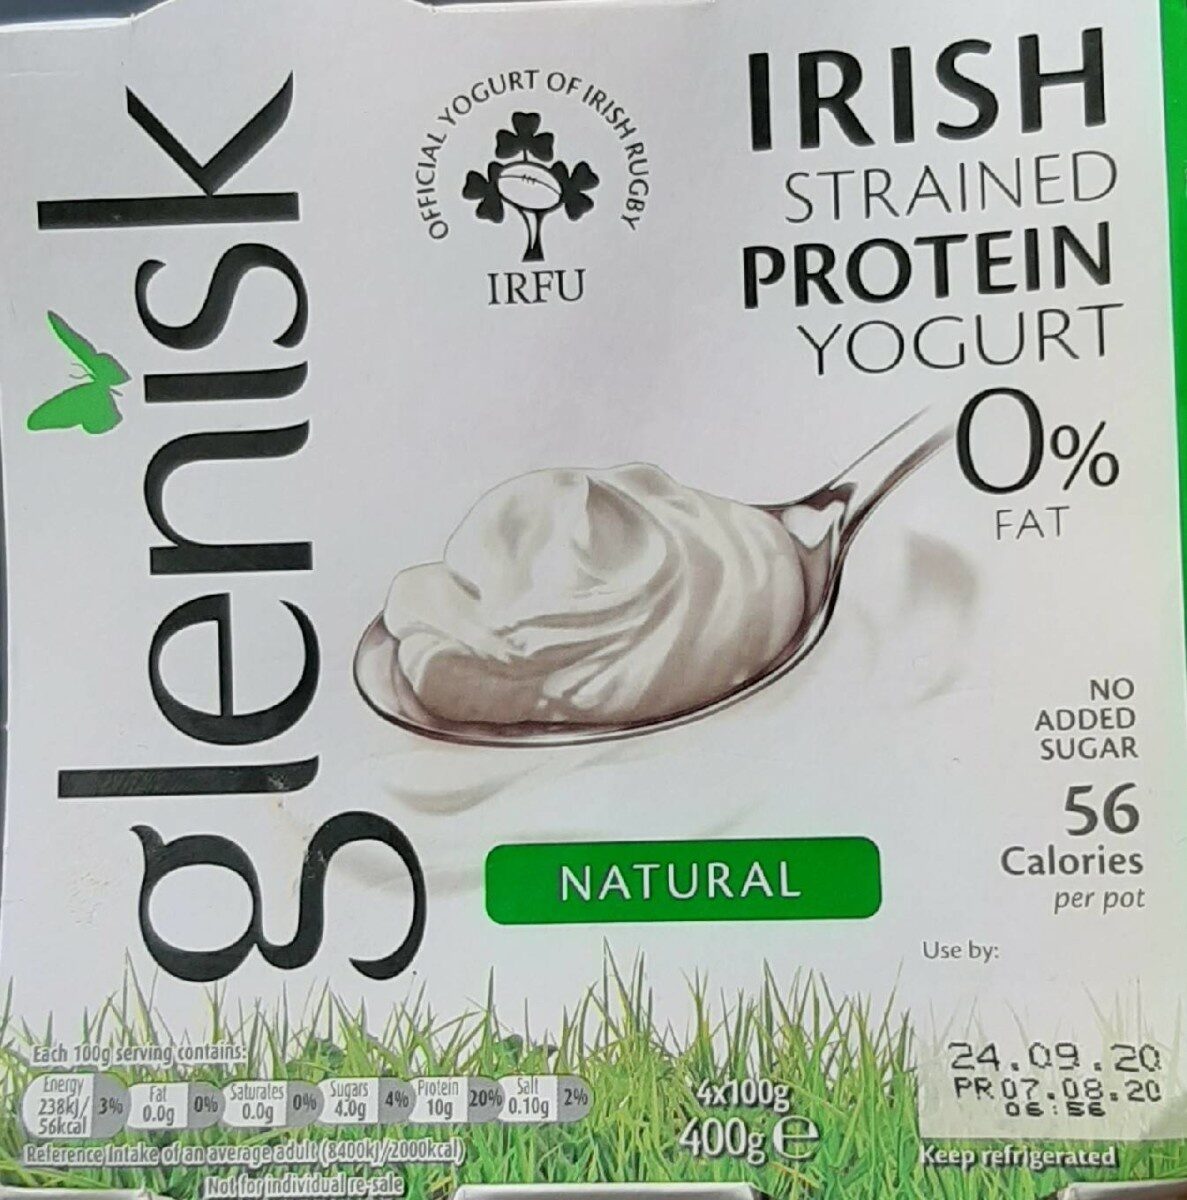 Irish Strained Protein Yogurt, 0% Fat - Product - en